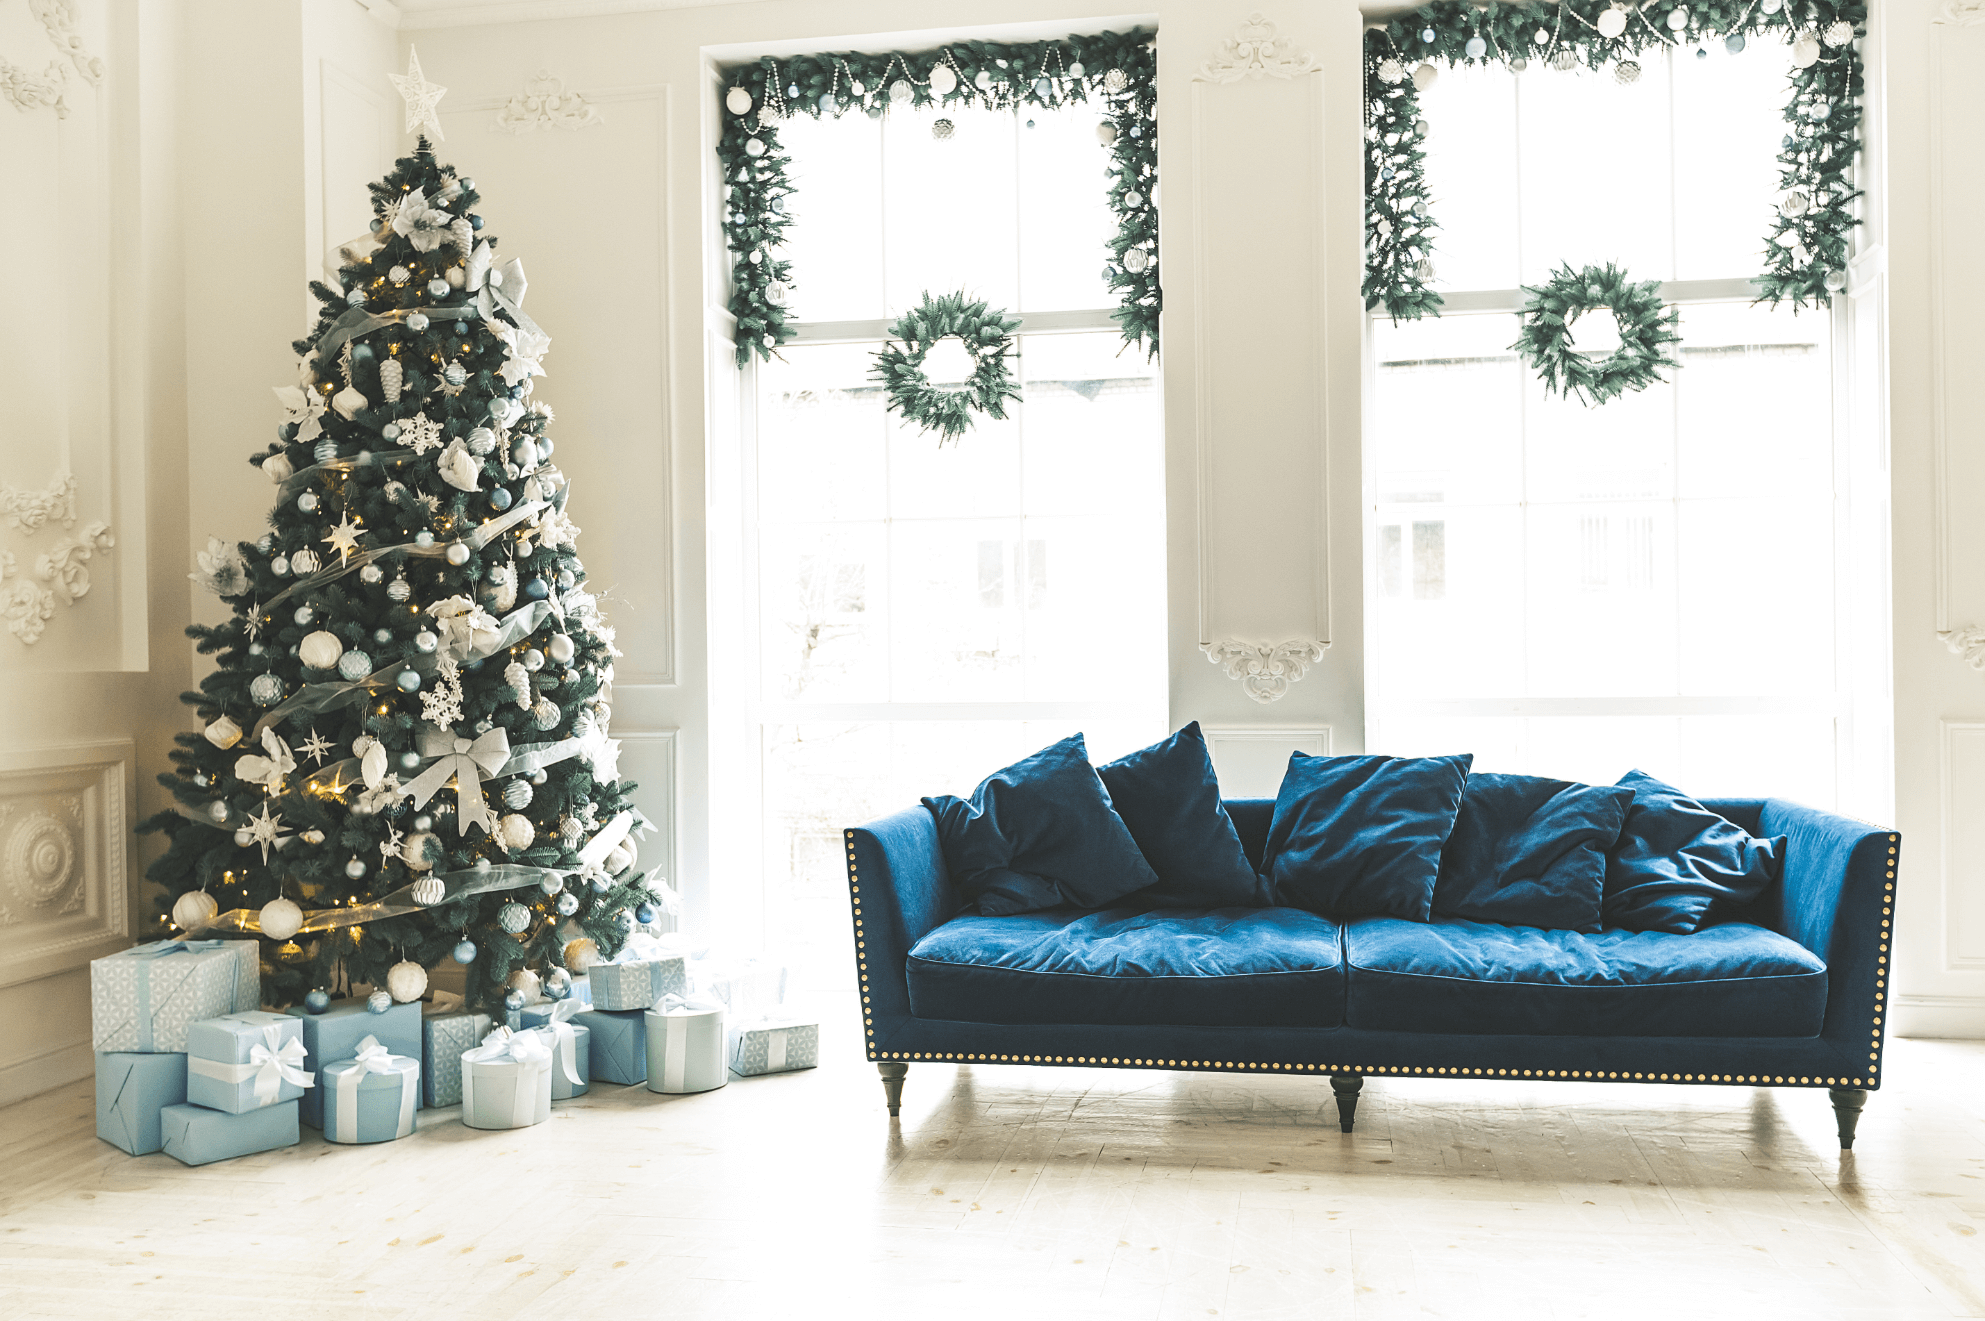 Christmas Decorations Mini Tree Ornaments Small Snowflake Decor Enjoy DIY  Fun Create Warm And Lasting For Window